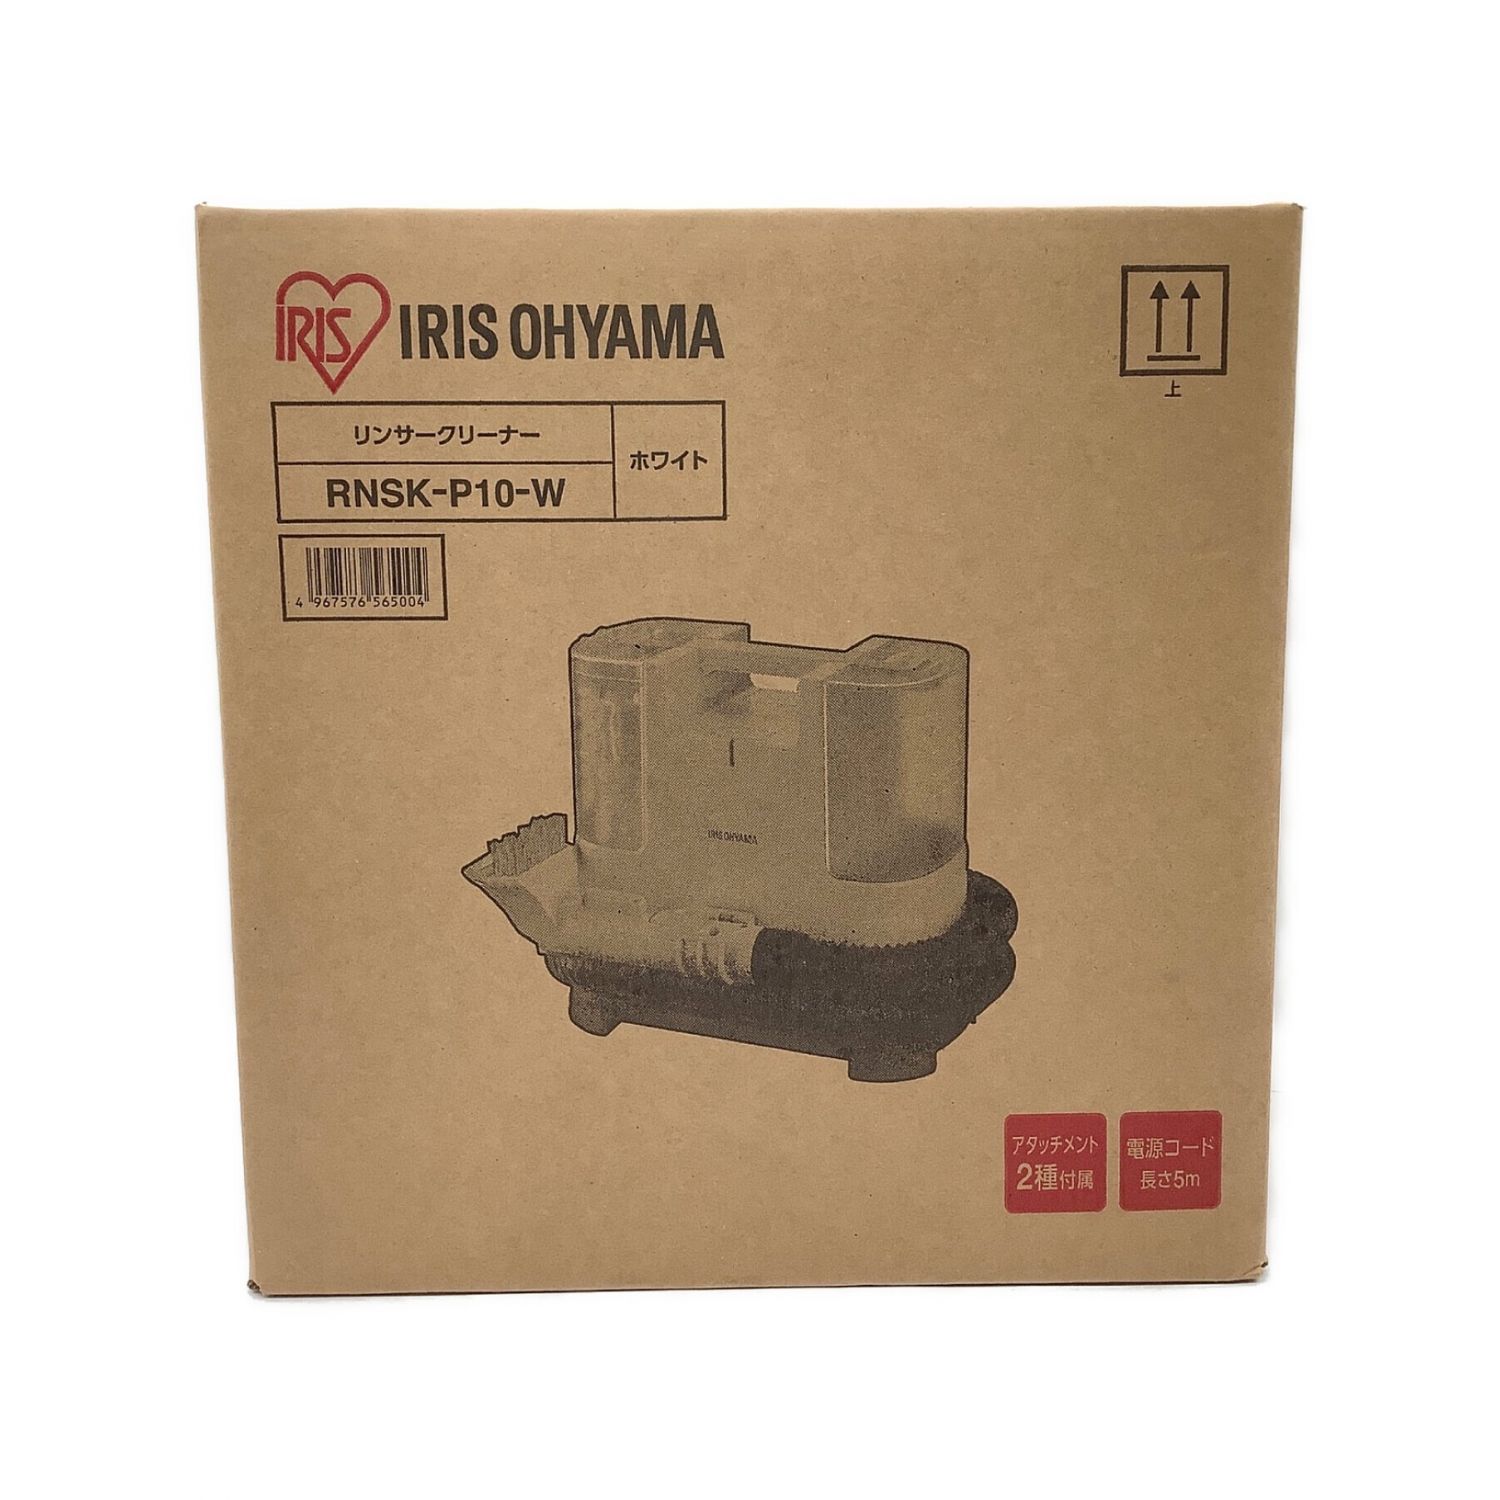 IRIS OHYAMA (アイリスオーヤマ) リンサークリーナー RNSK-P10-W 2021